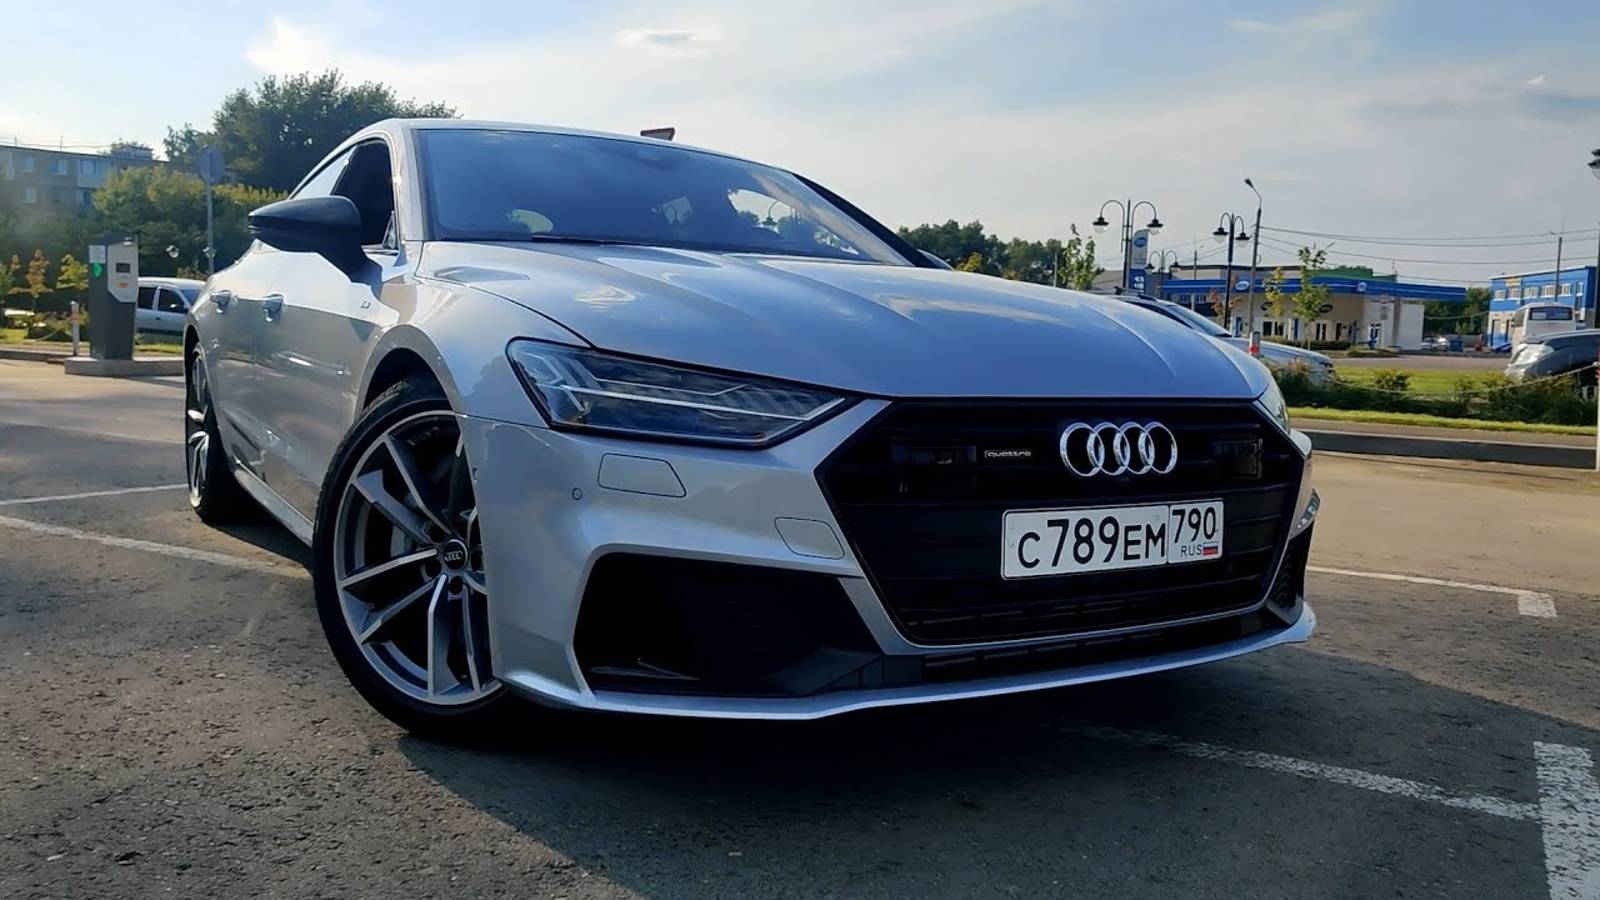 Audi a7 4g (1080p60fps)